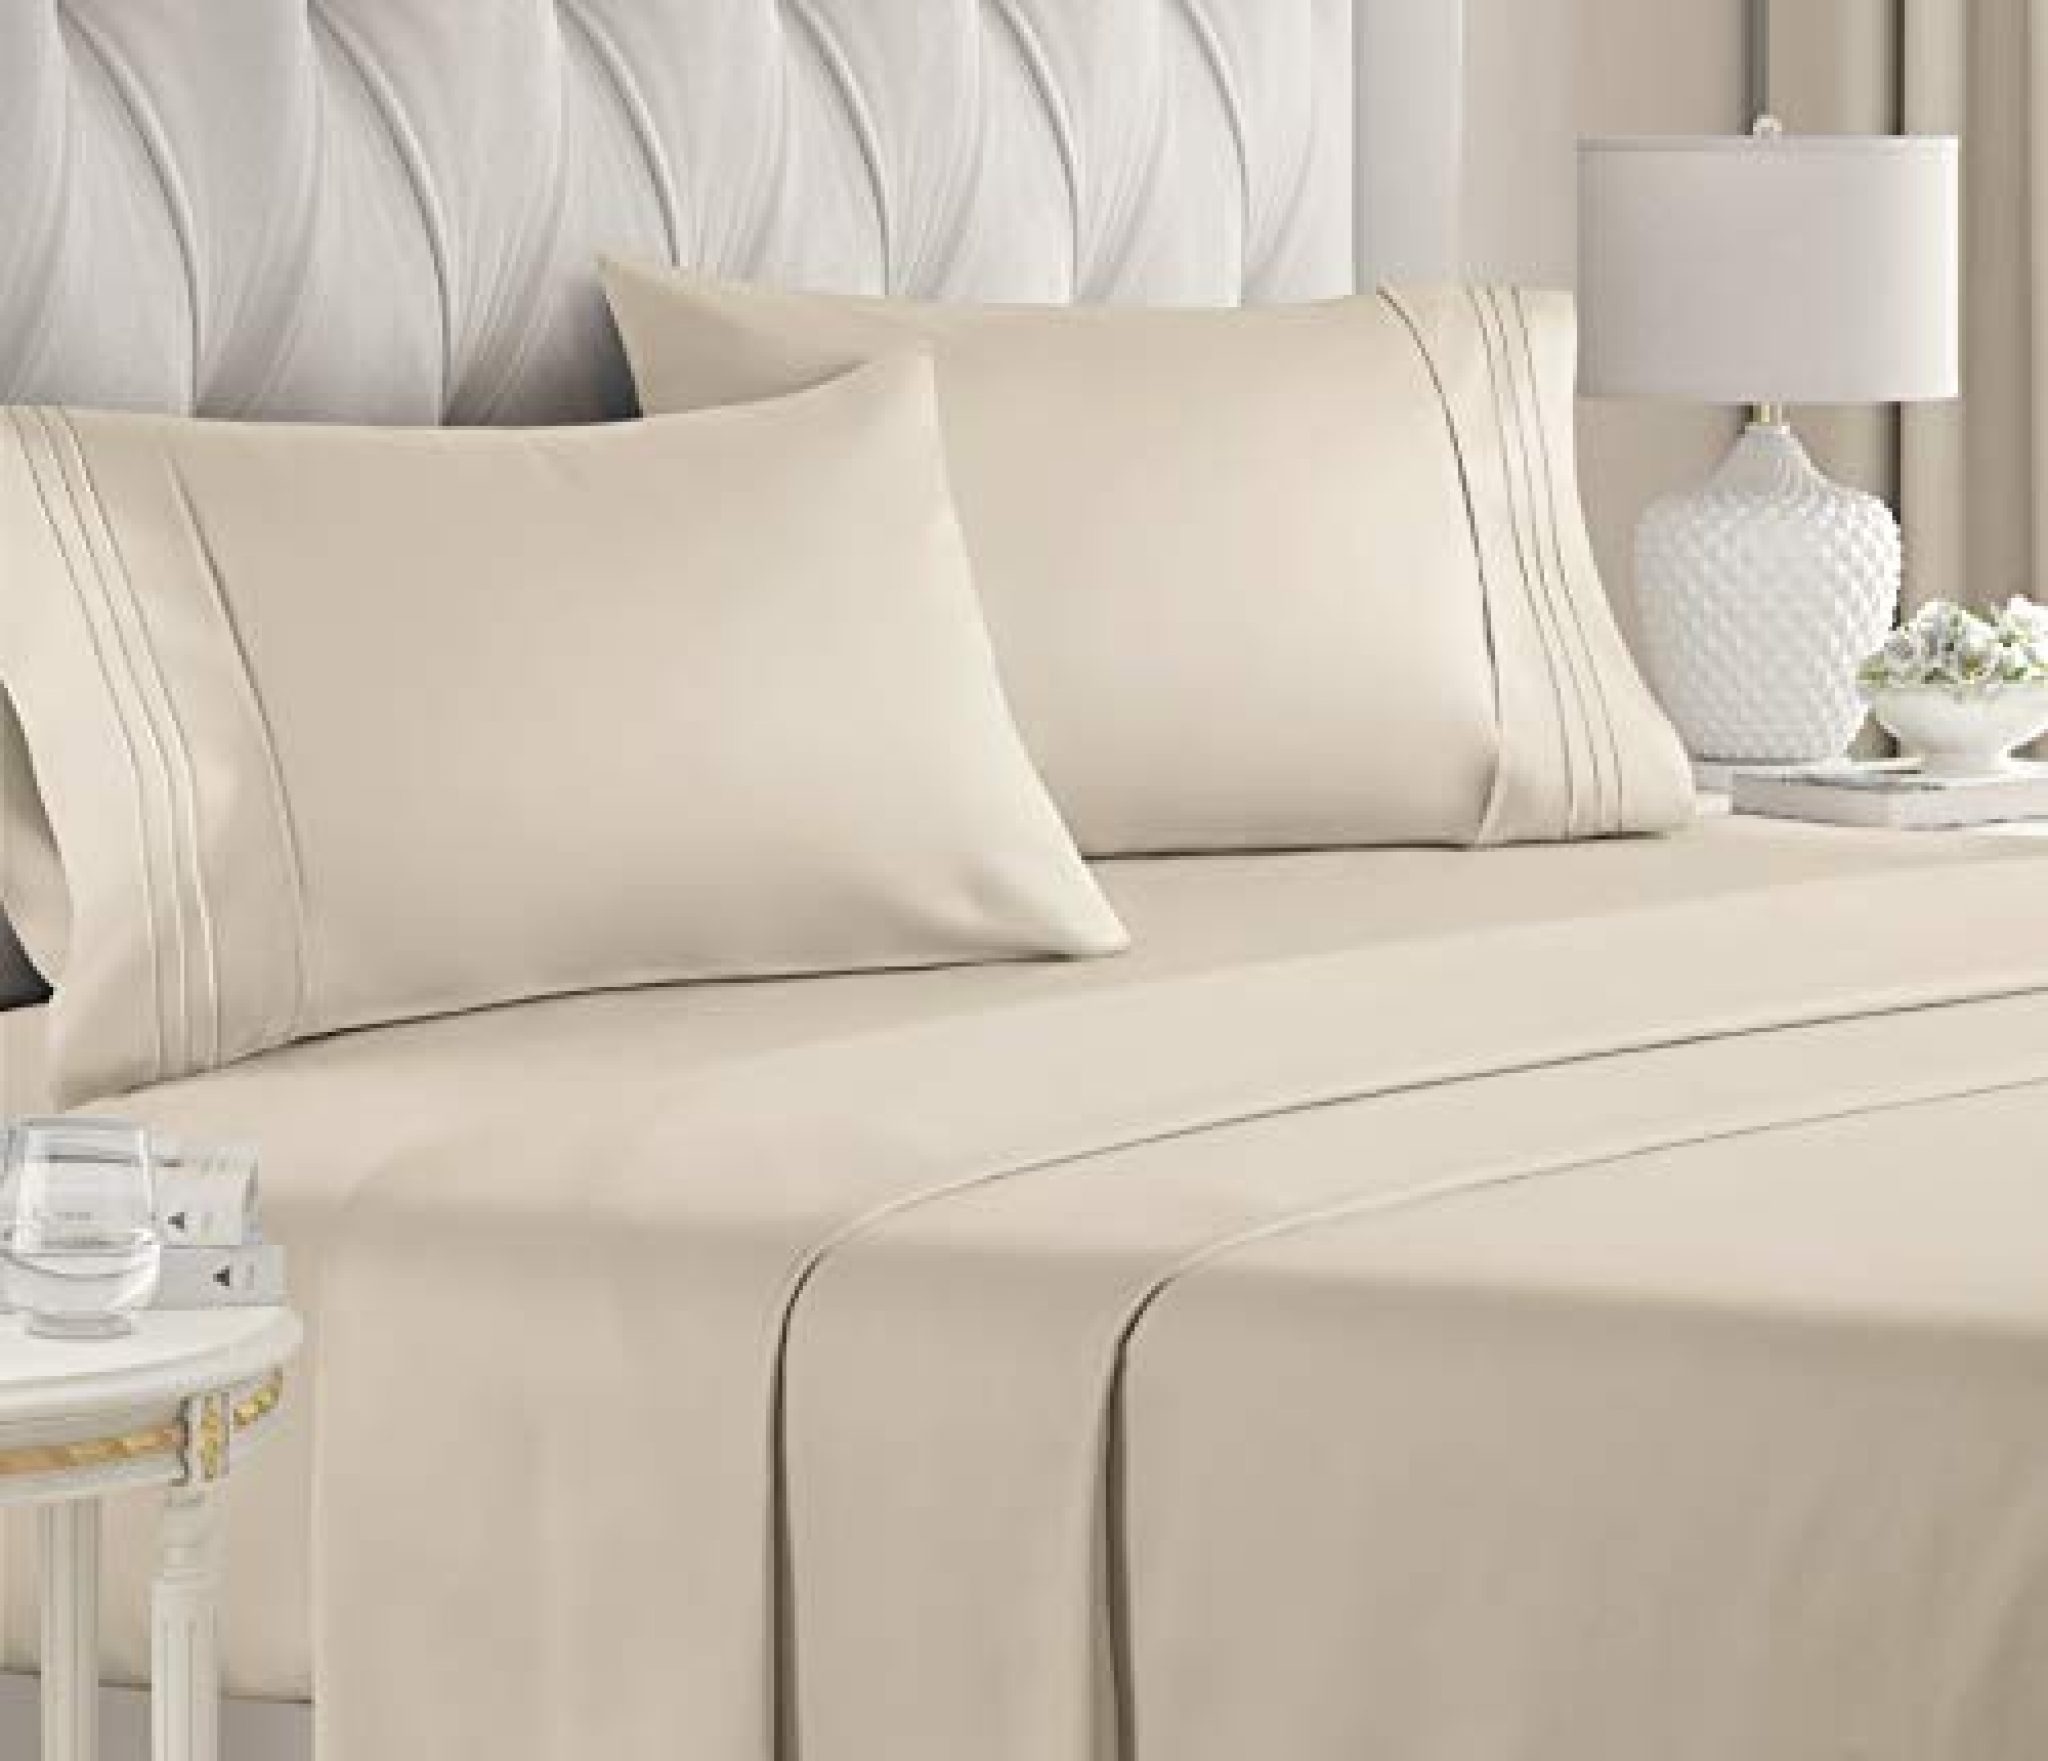 CGK Unlimited Queen Size Sheet Set - 4 Piece Set - Hotel Luxury Bed